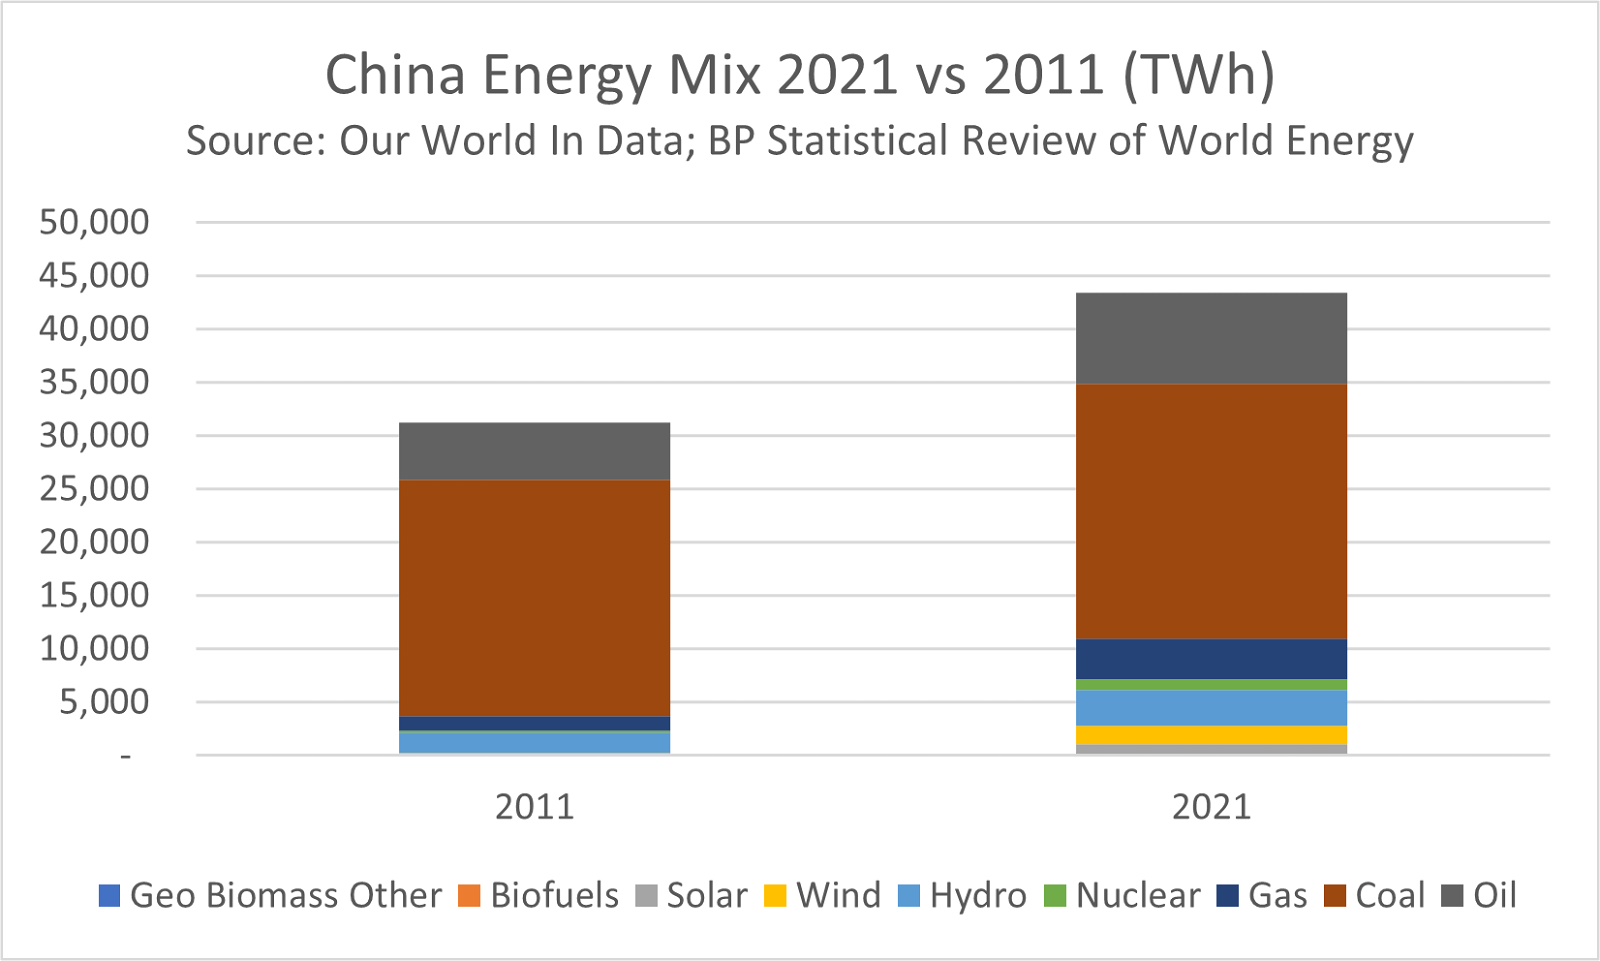 China energy mix 2021 vs. 2011